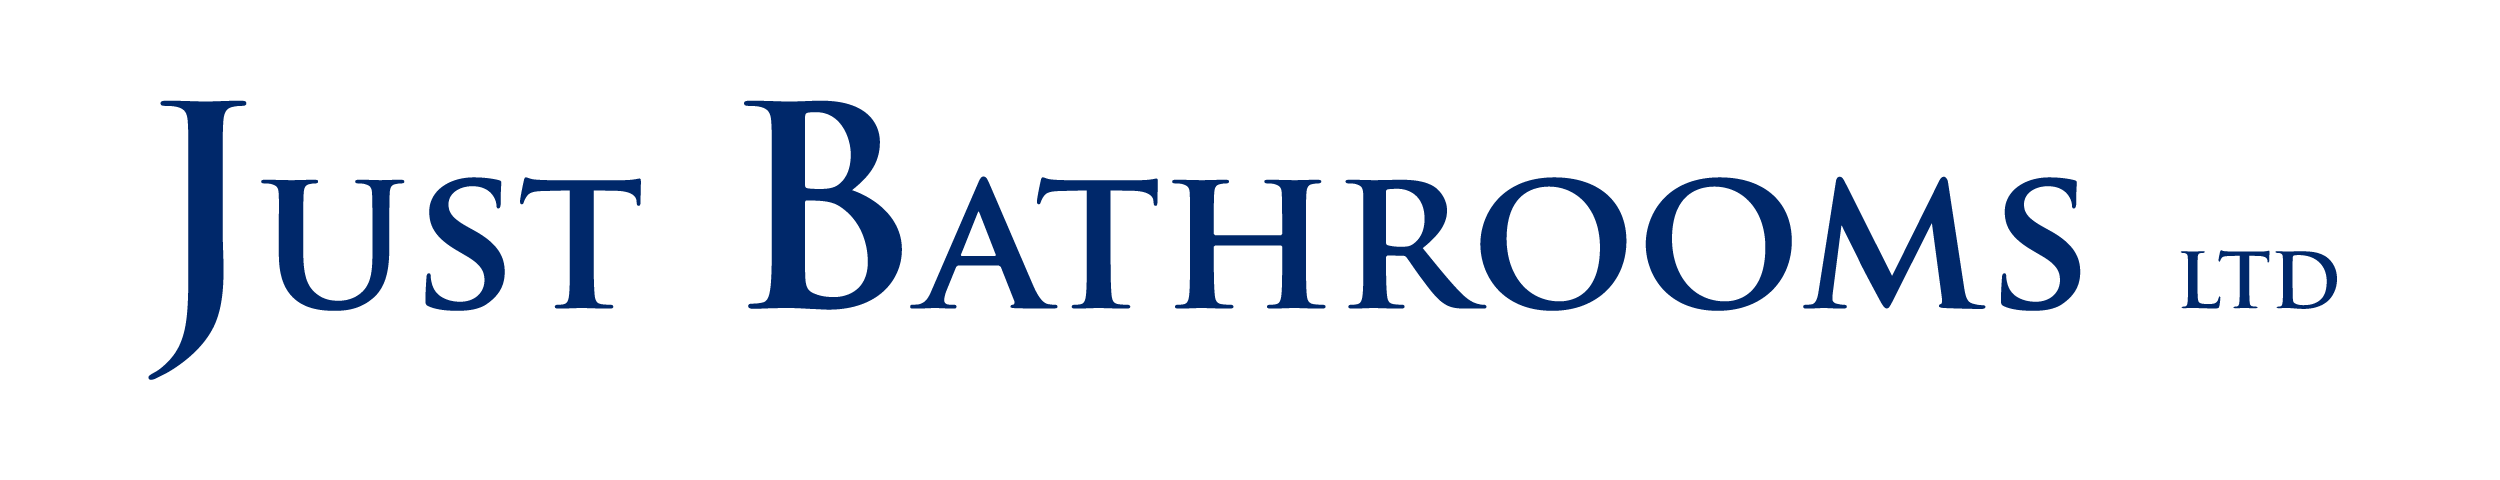 Just Bathrooms LTD – Creating Beautiful Bathrooms